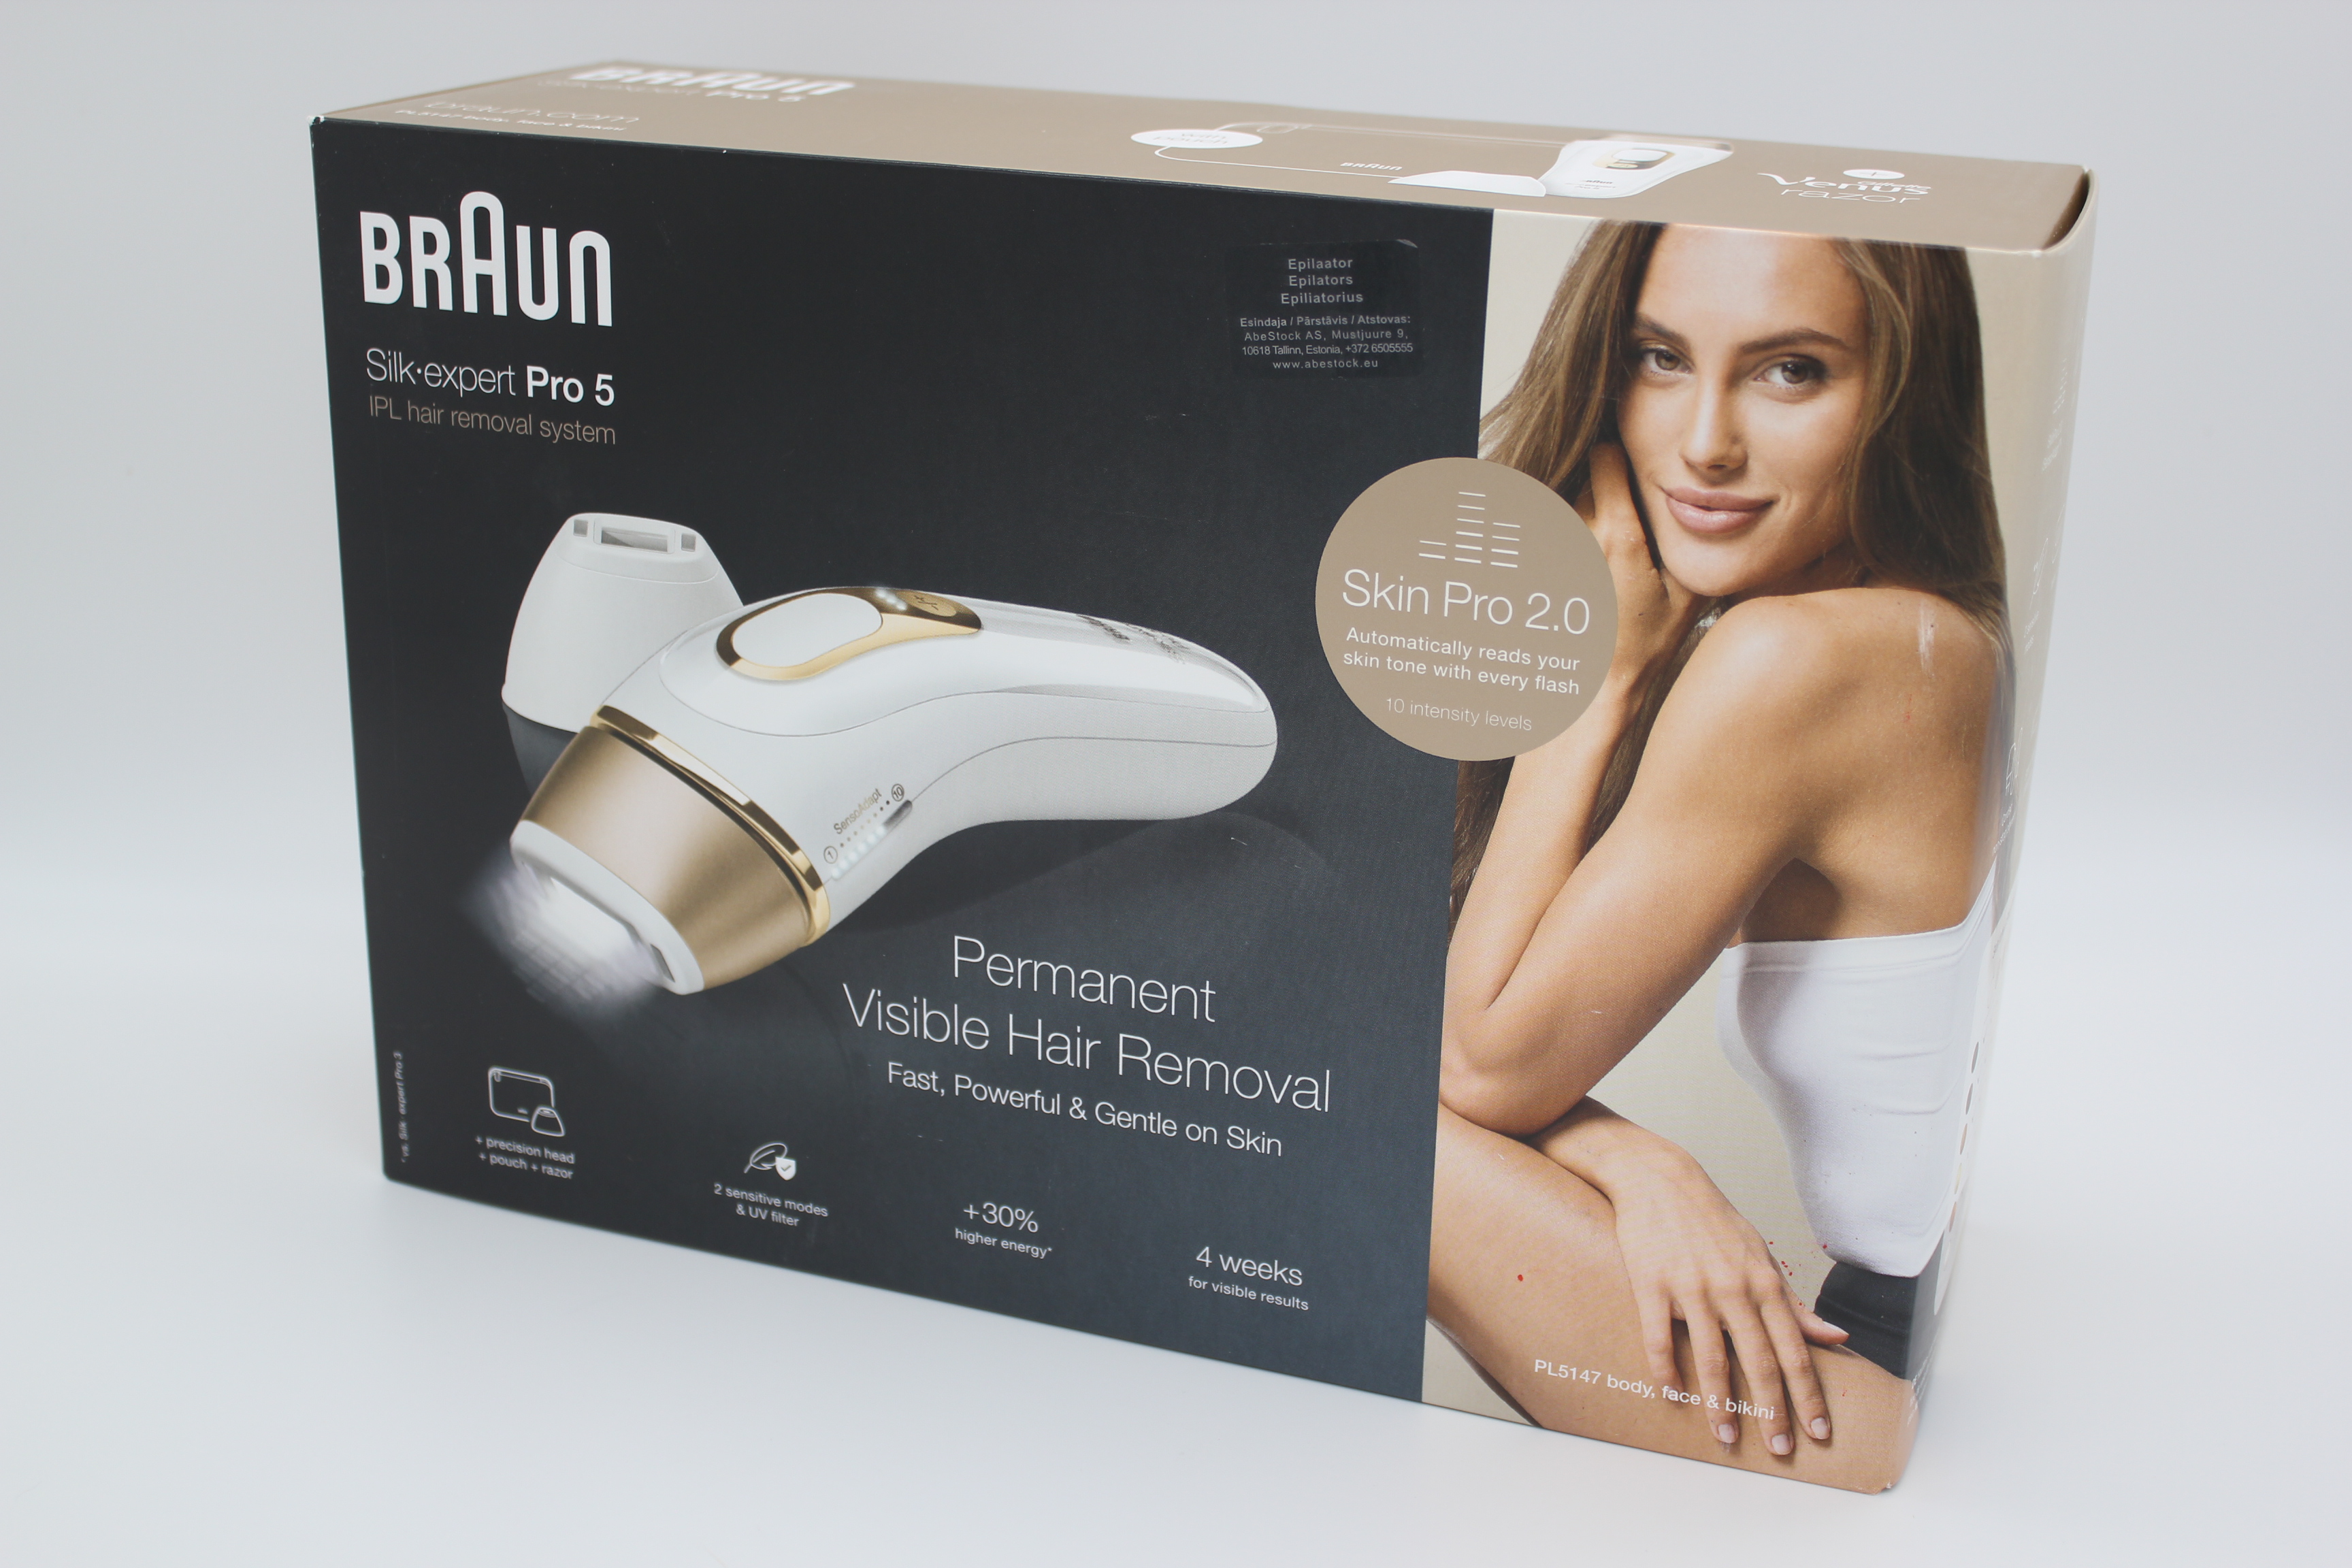 Braun Silk-expert Pro 5 PL5147 IPL Hair Removal with 3 extras